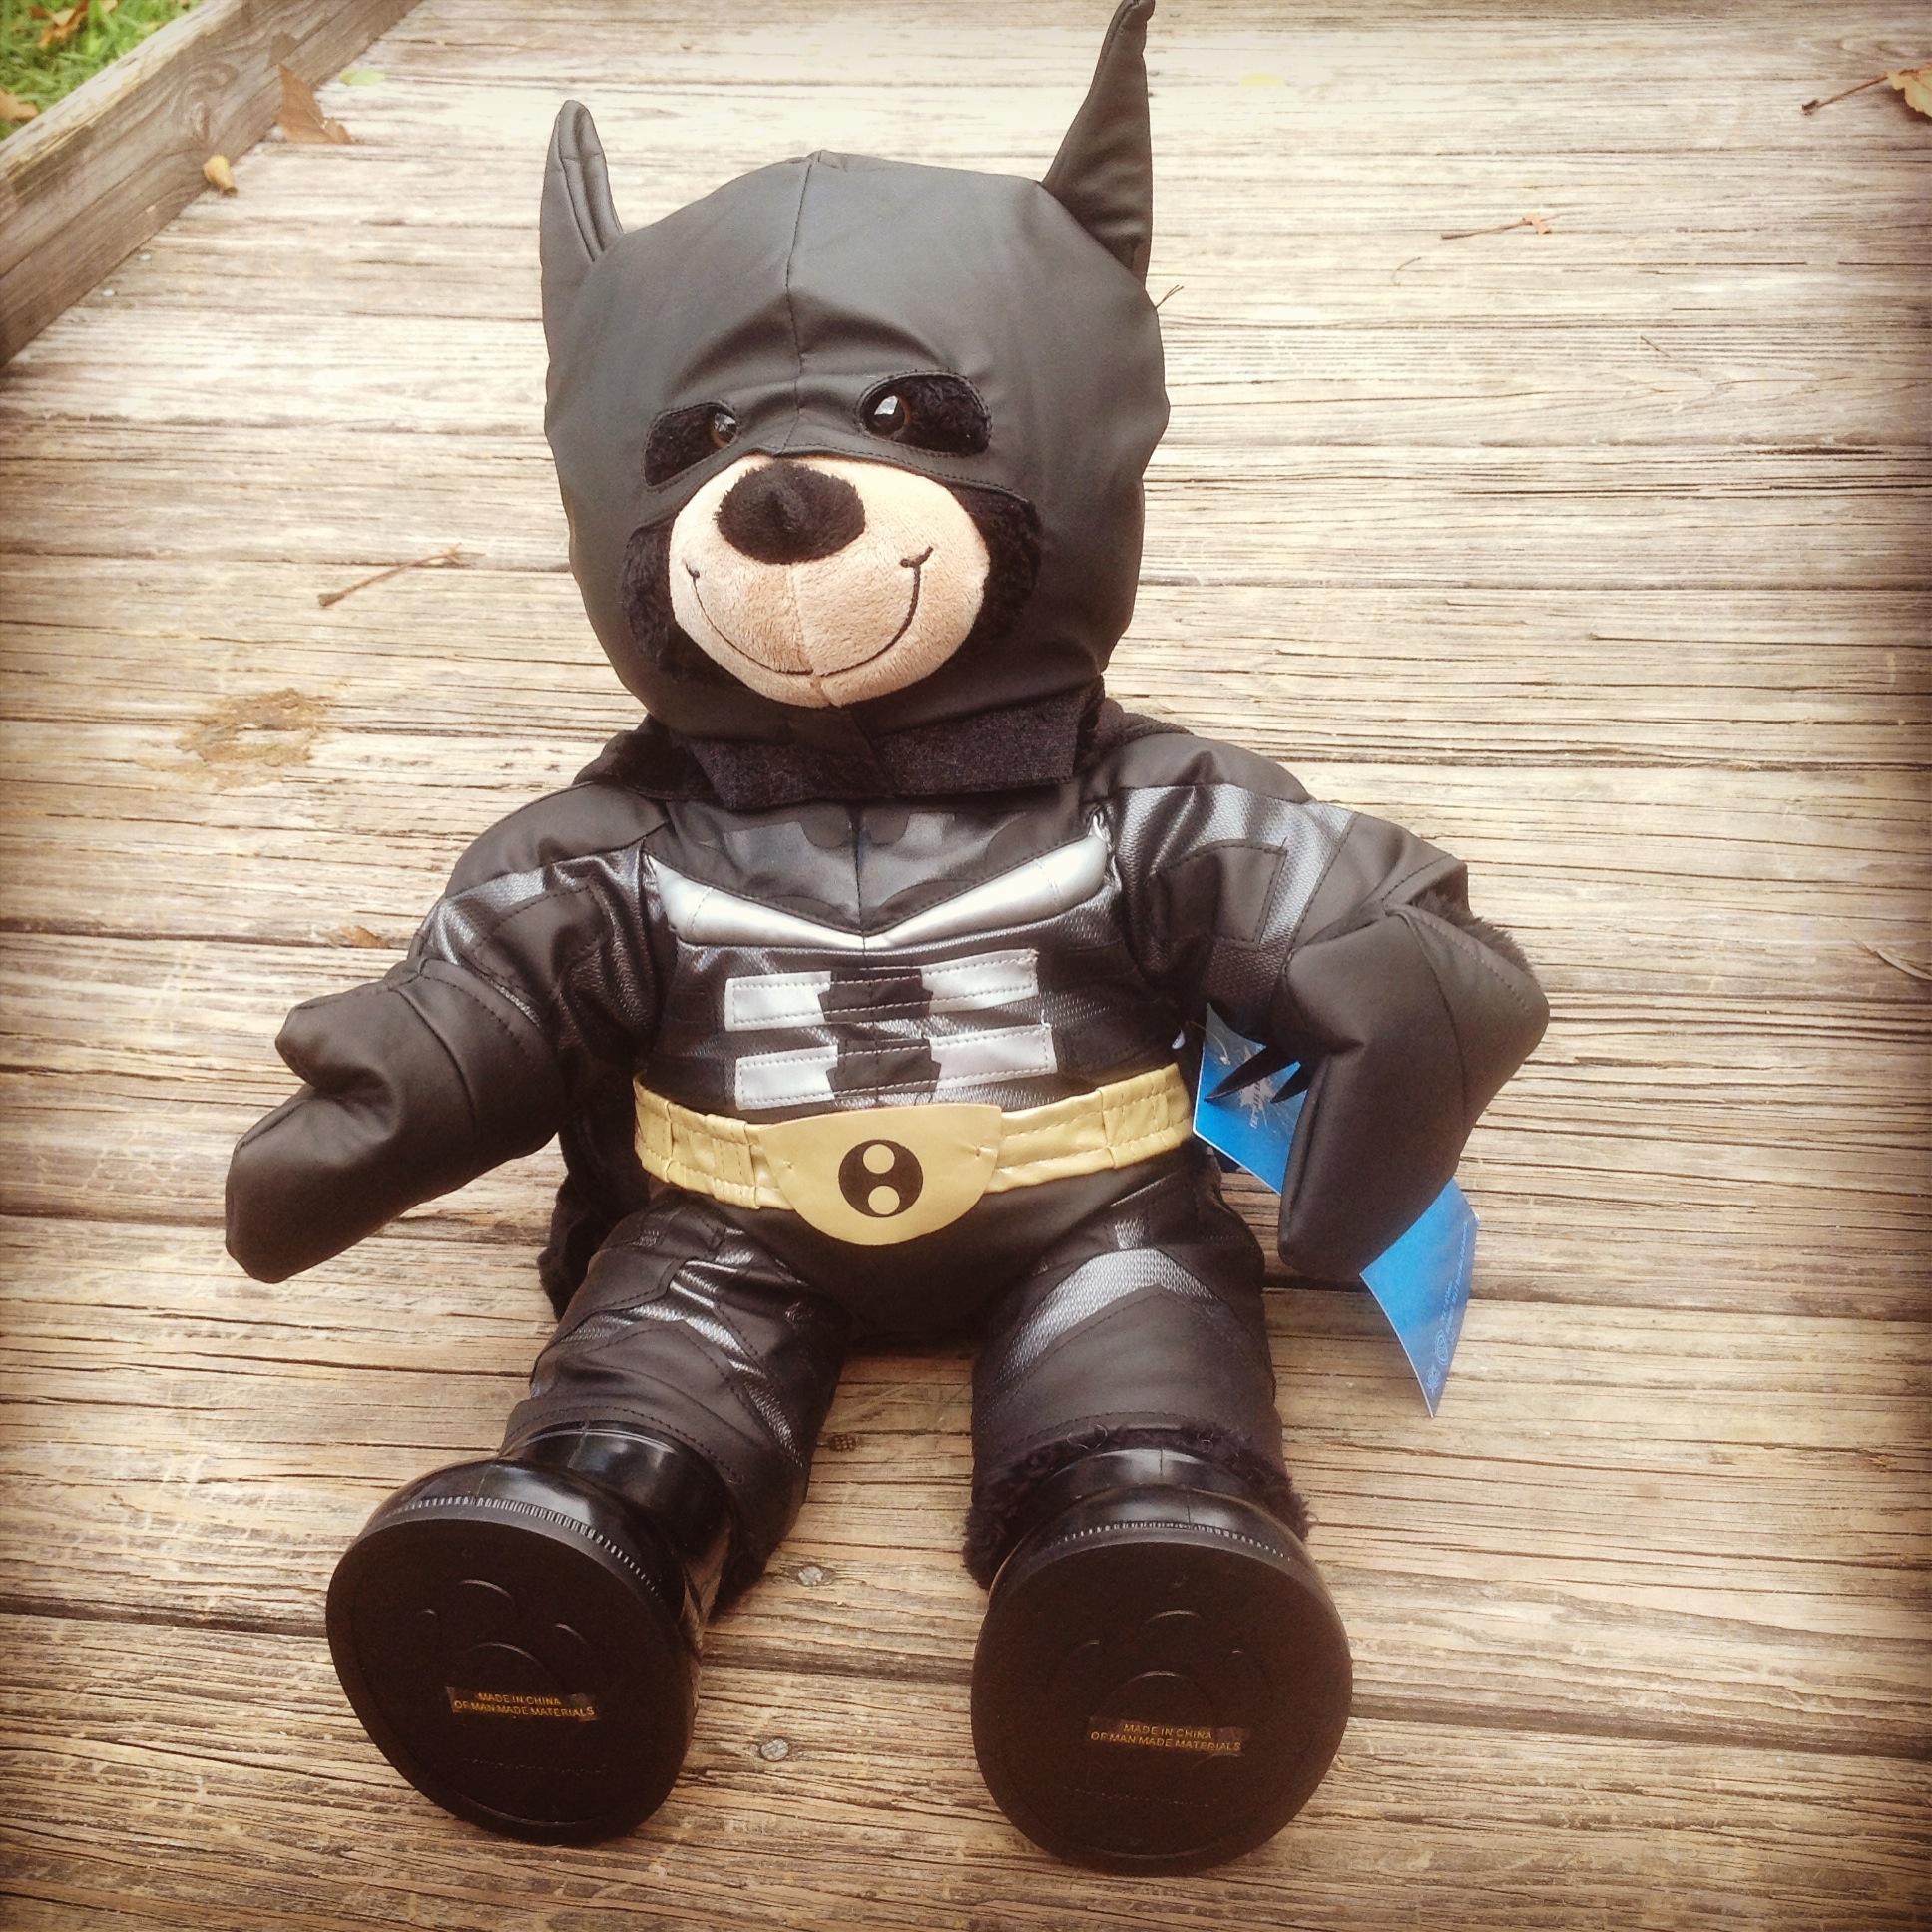 Batman Build-A-Bear